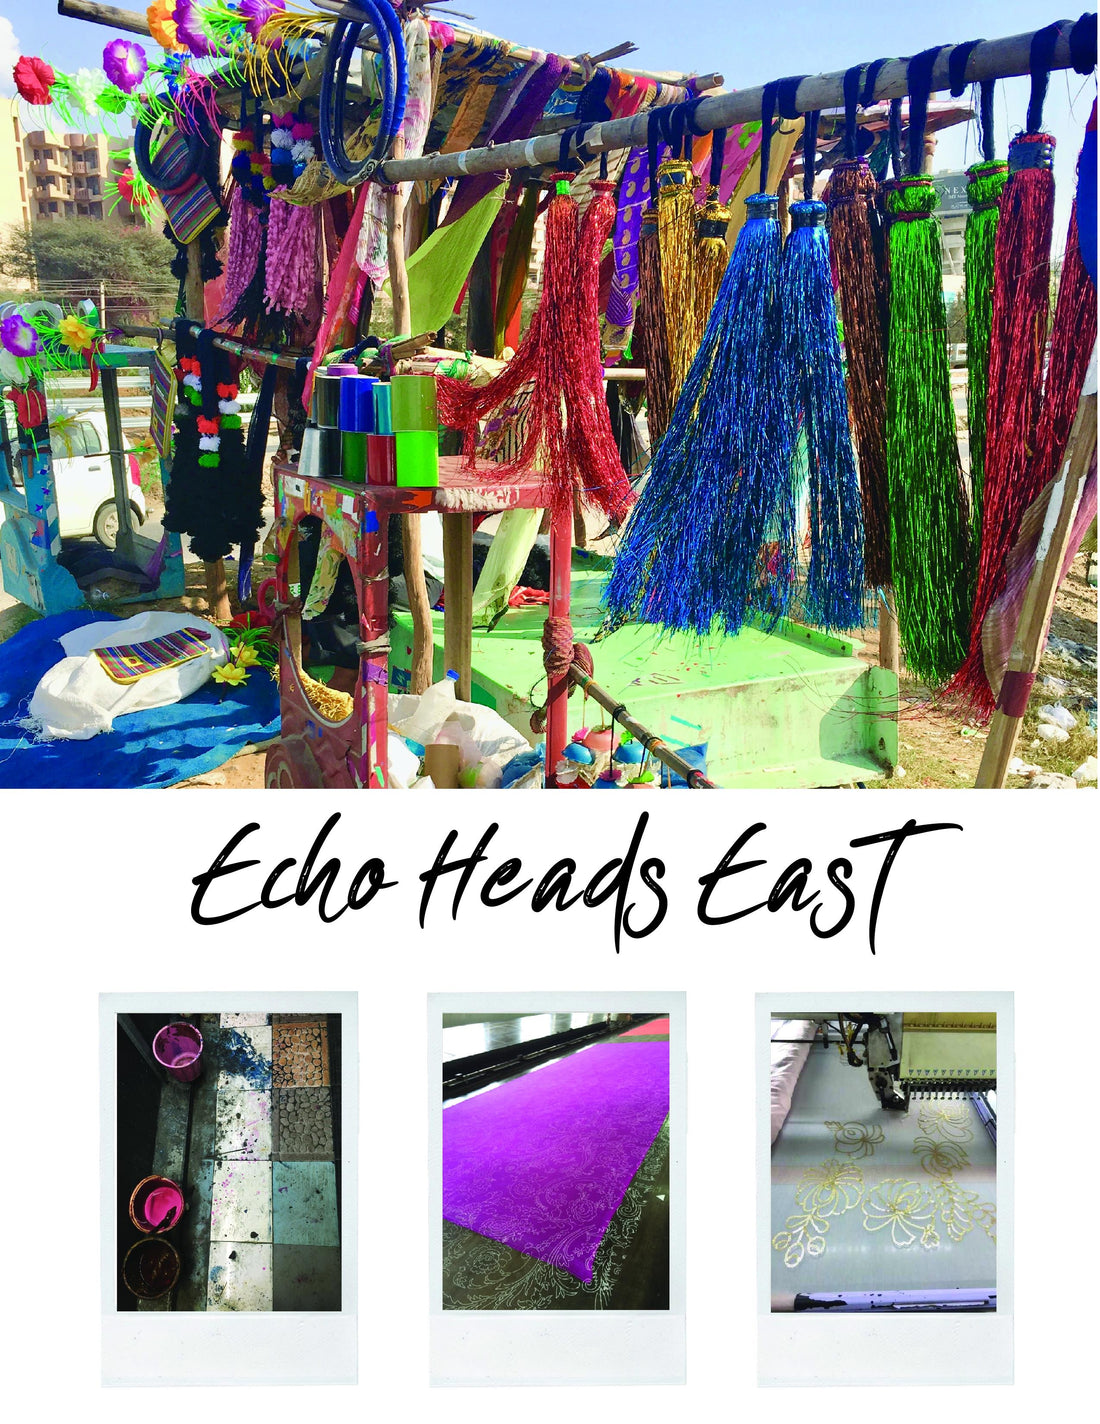 ECHO HEADS EAST